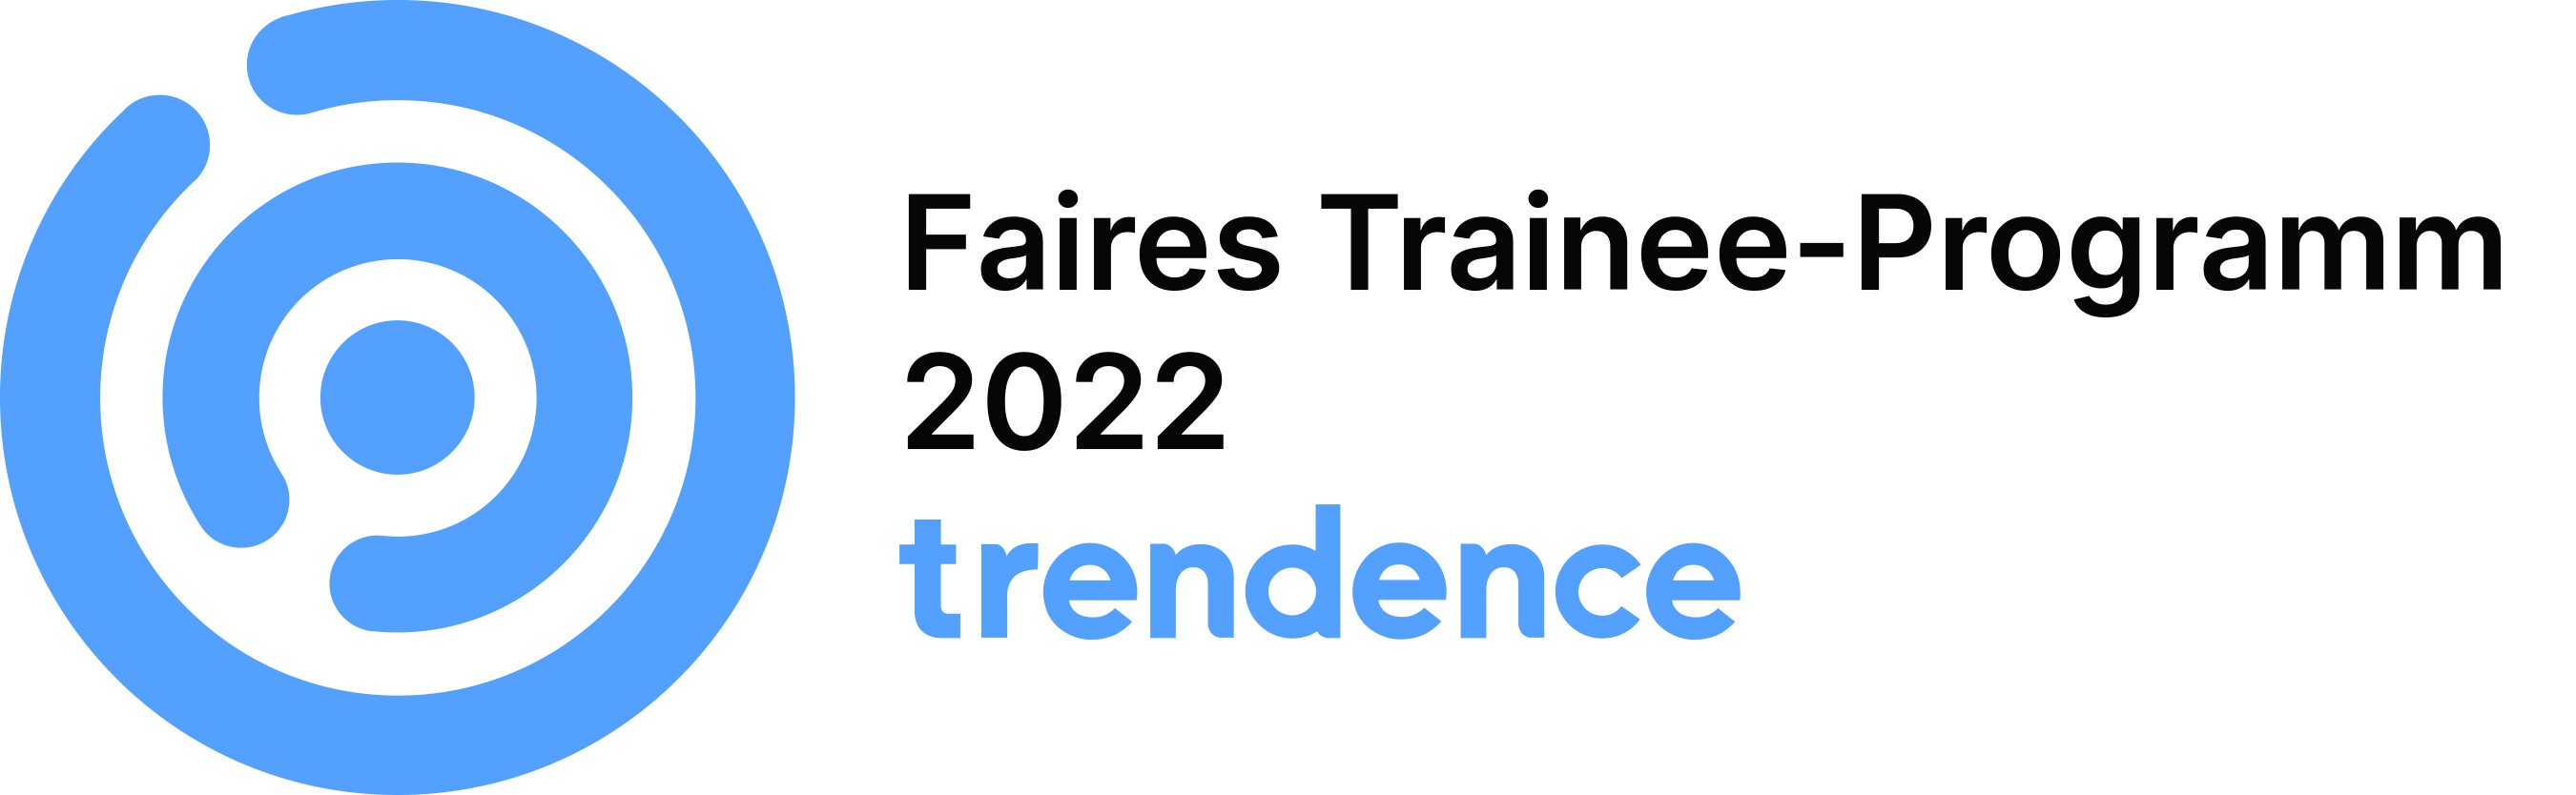 Award: Faires Trainee-Programm Trendence